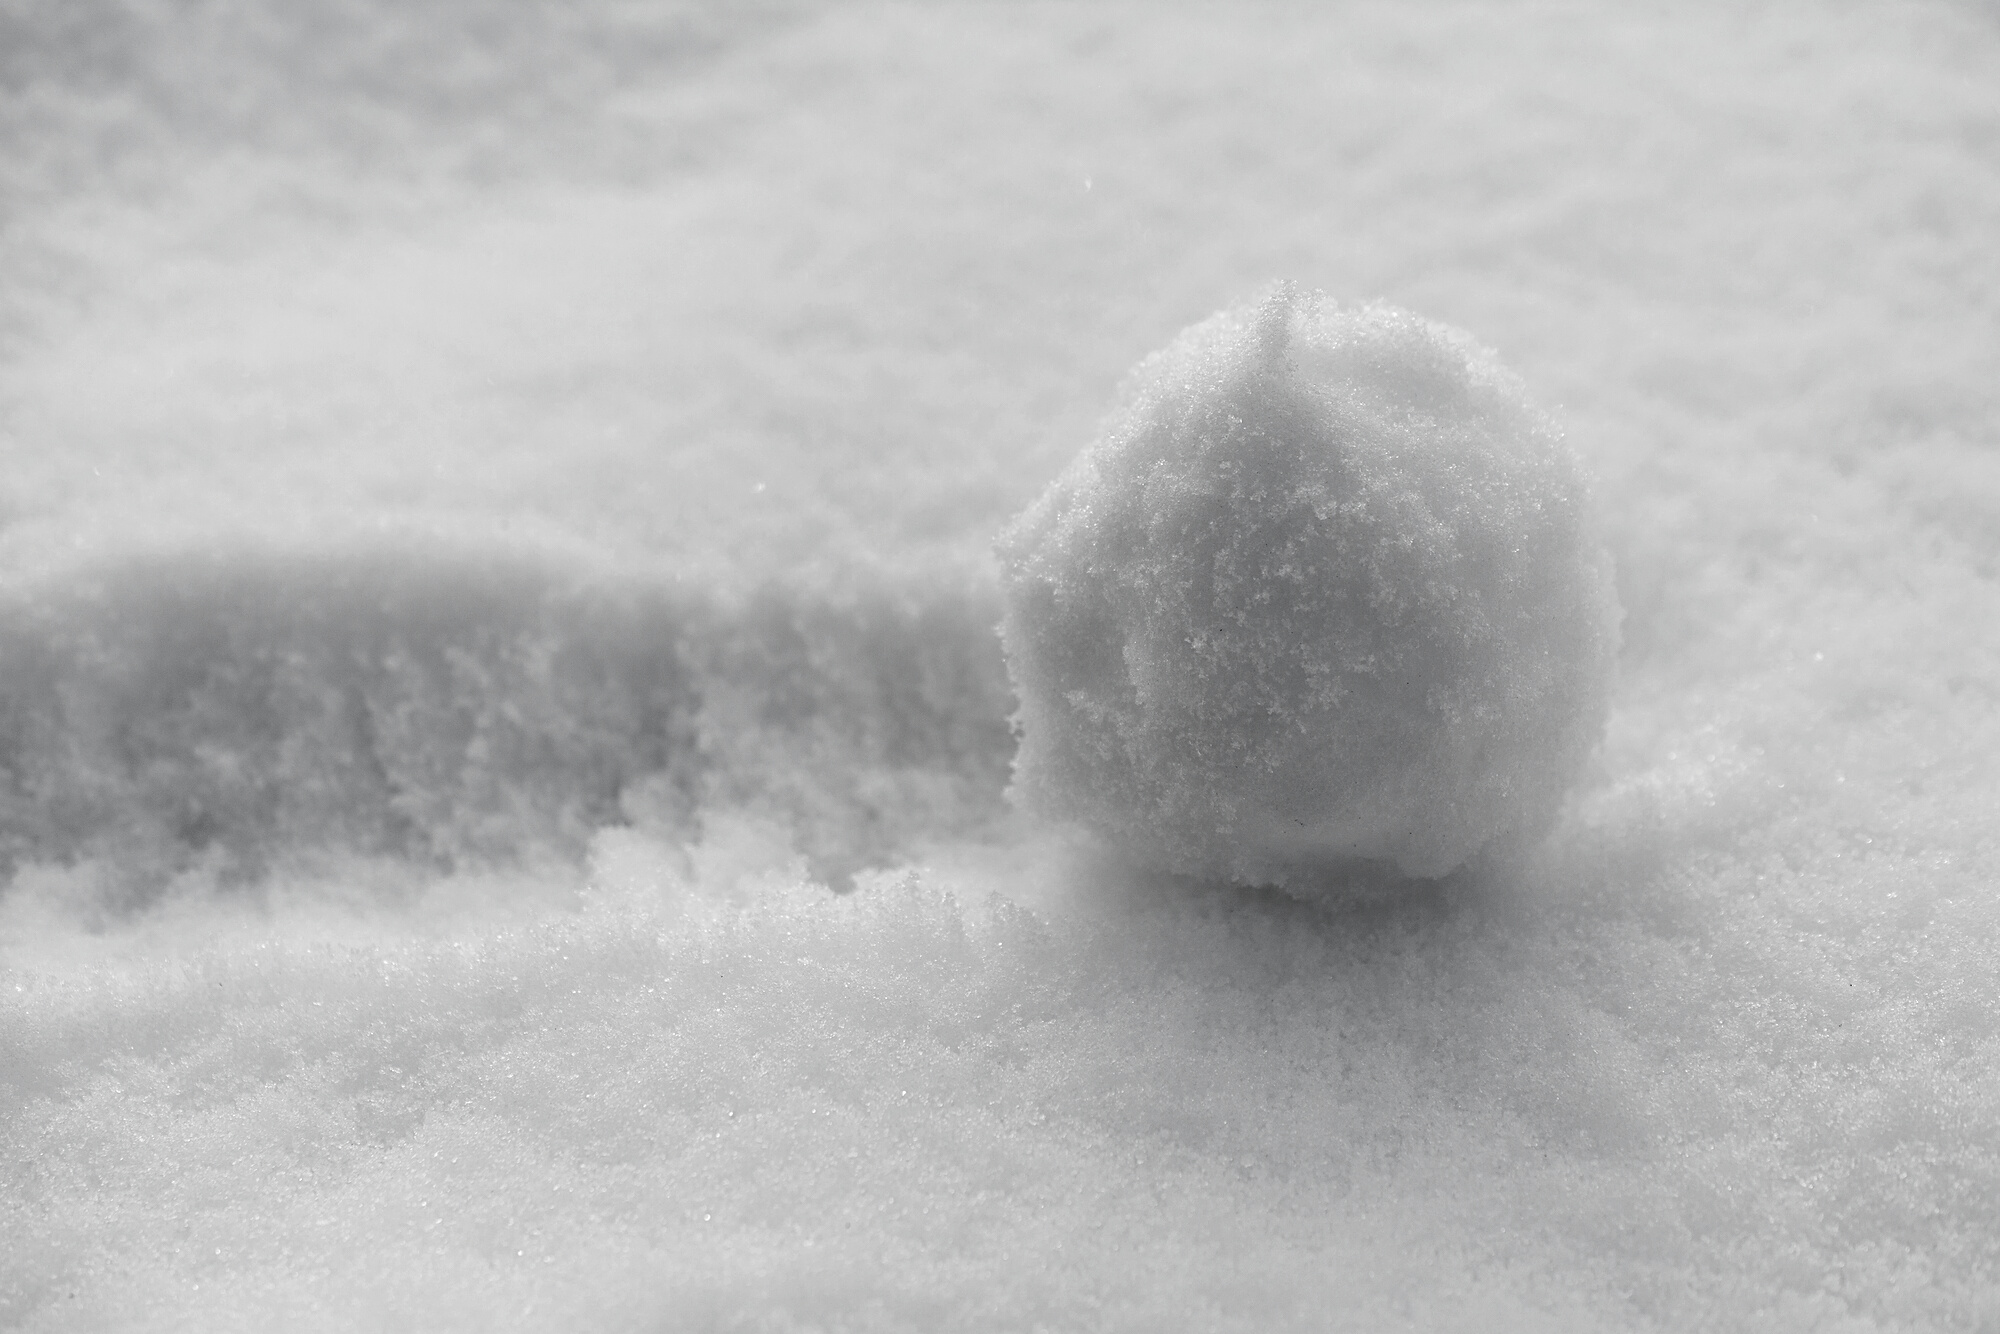 the snowball rolls